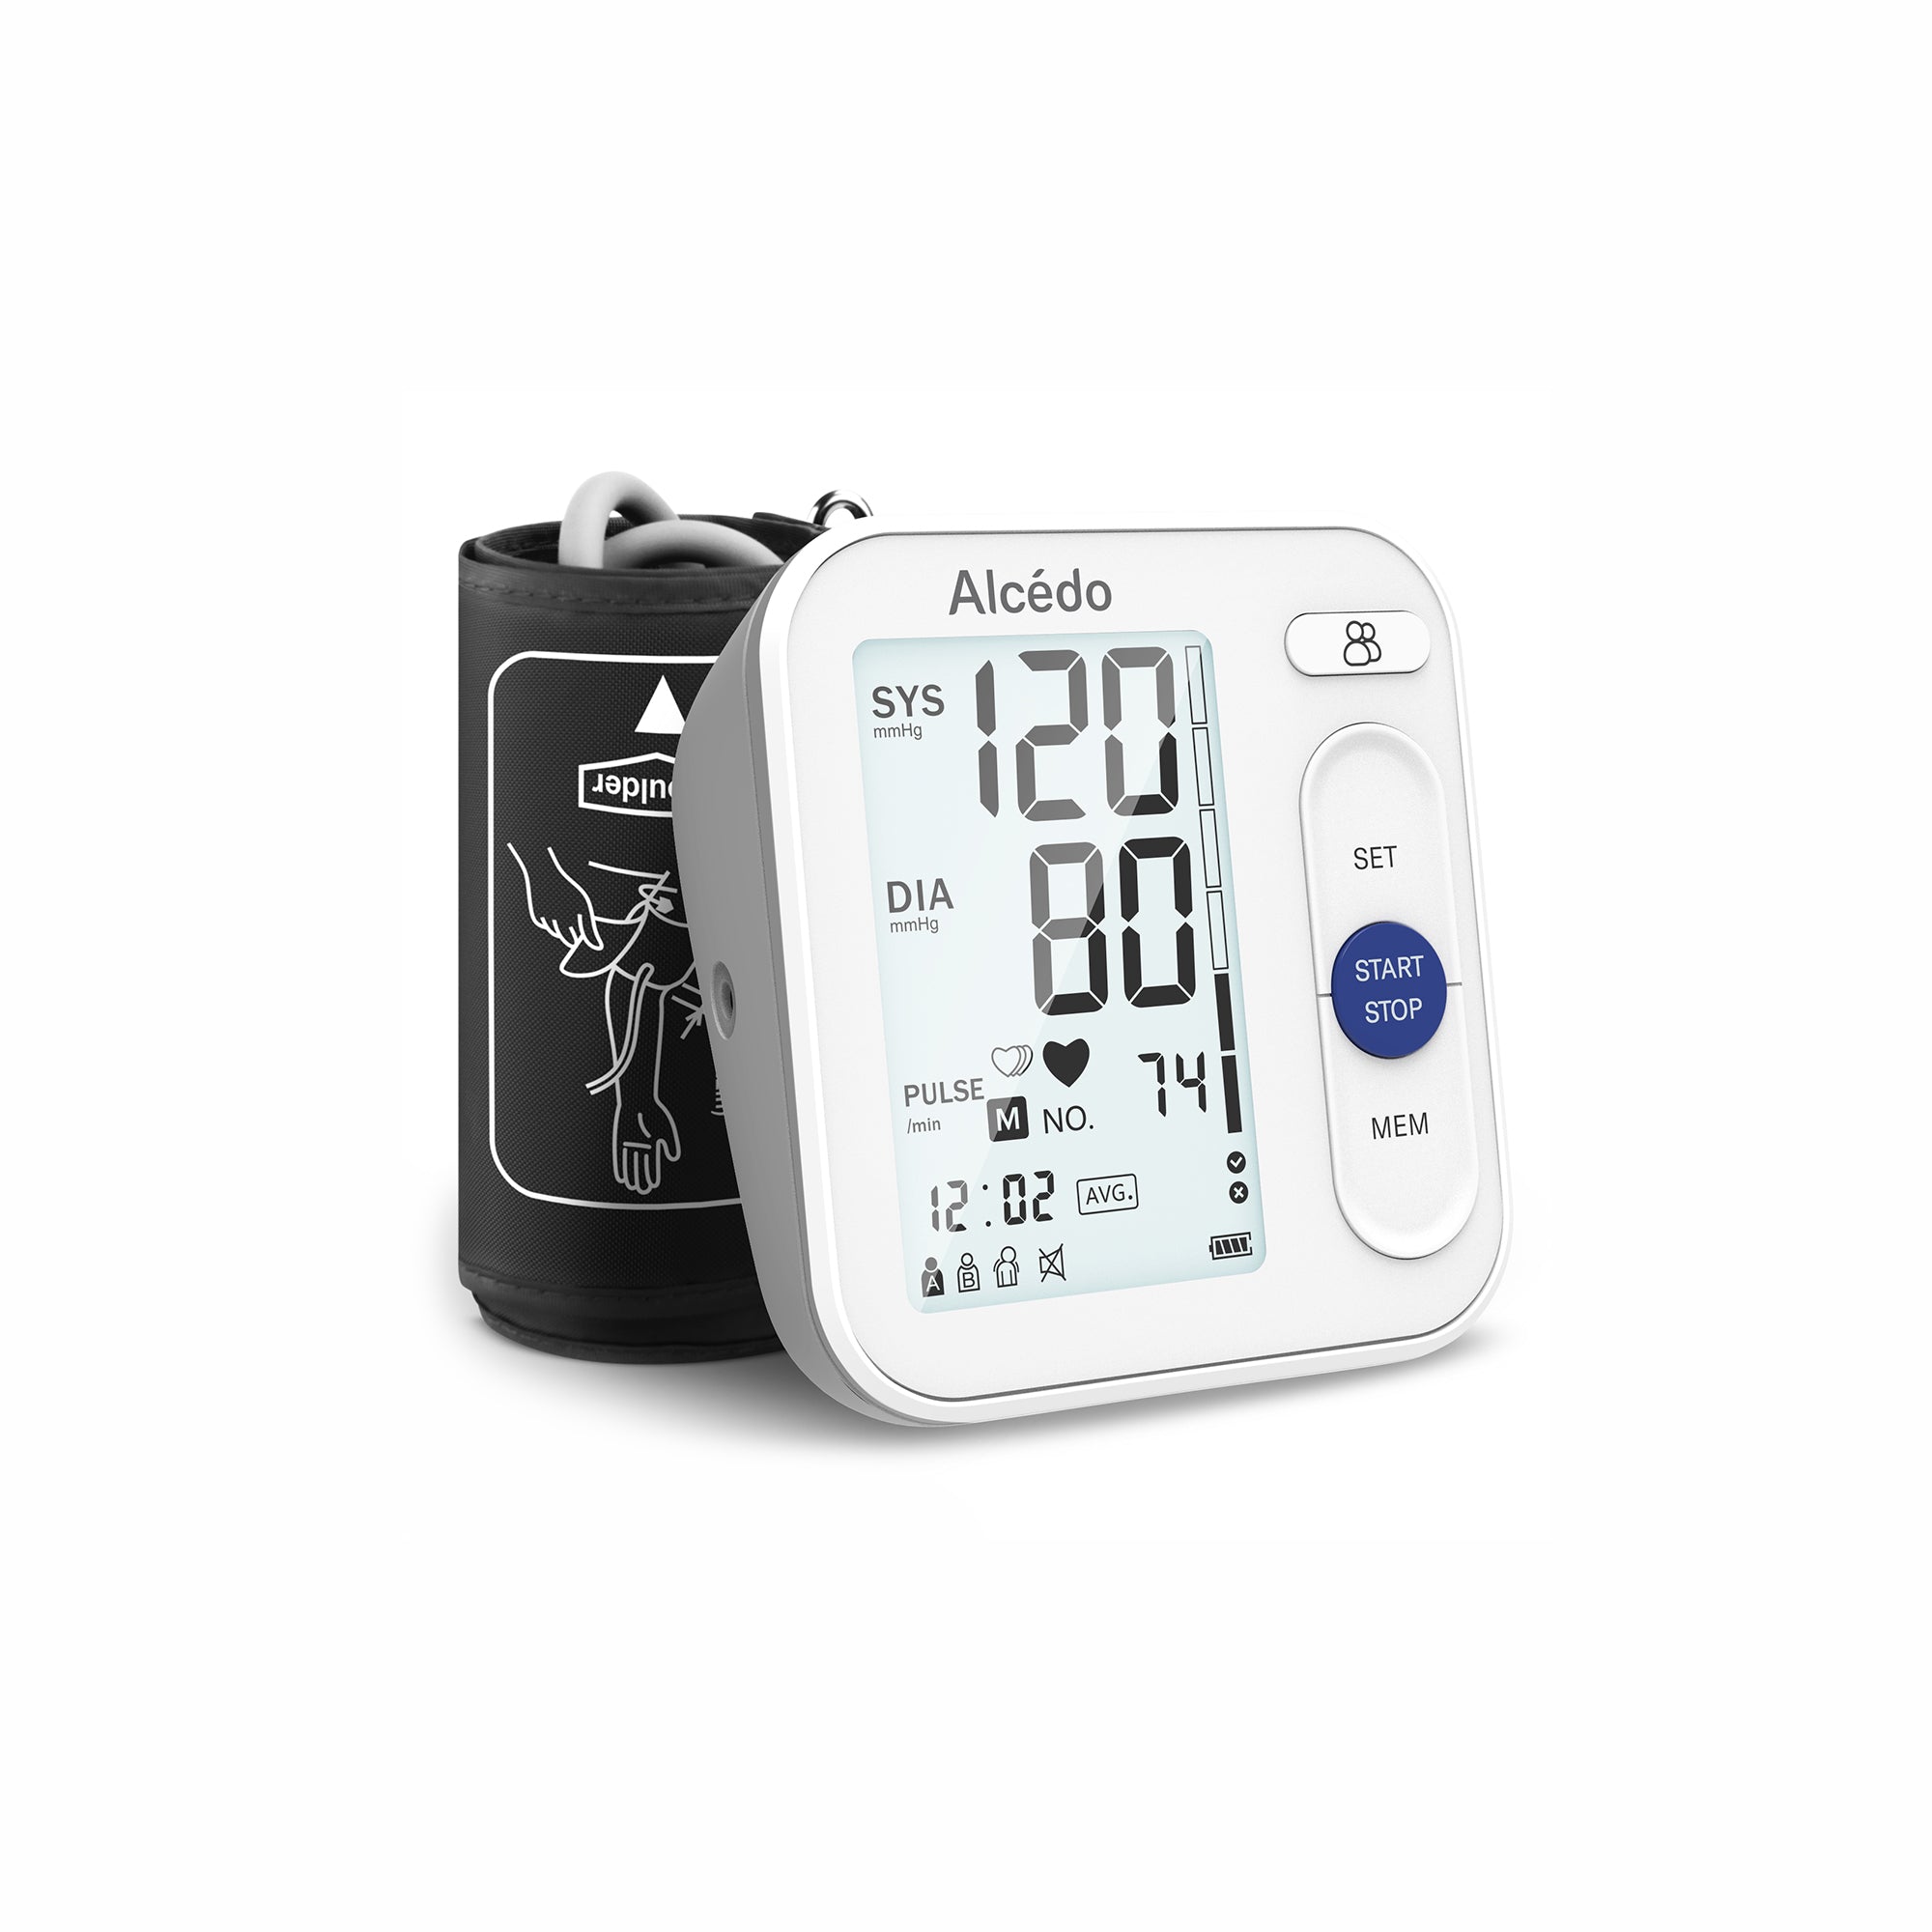 Alcedo Blood Pressure Monitor AE178